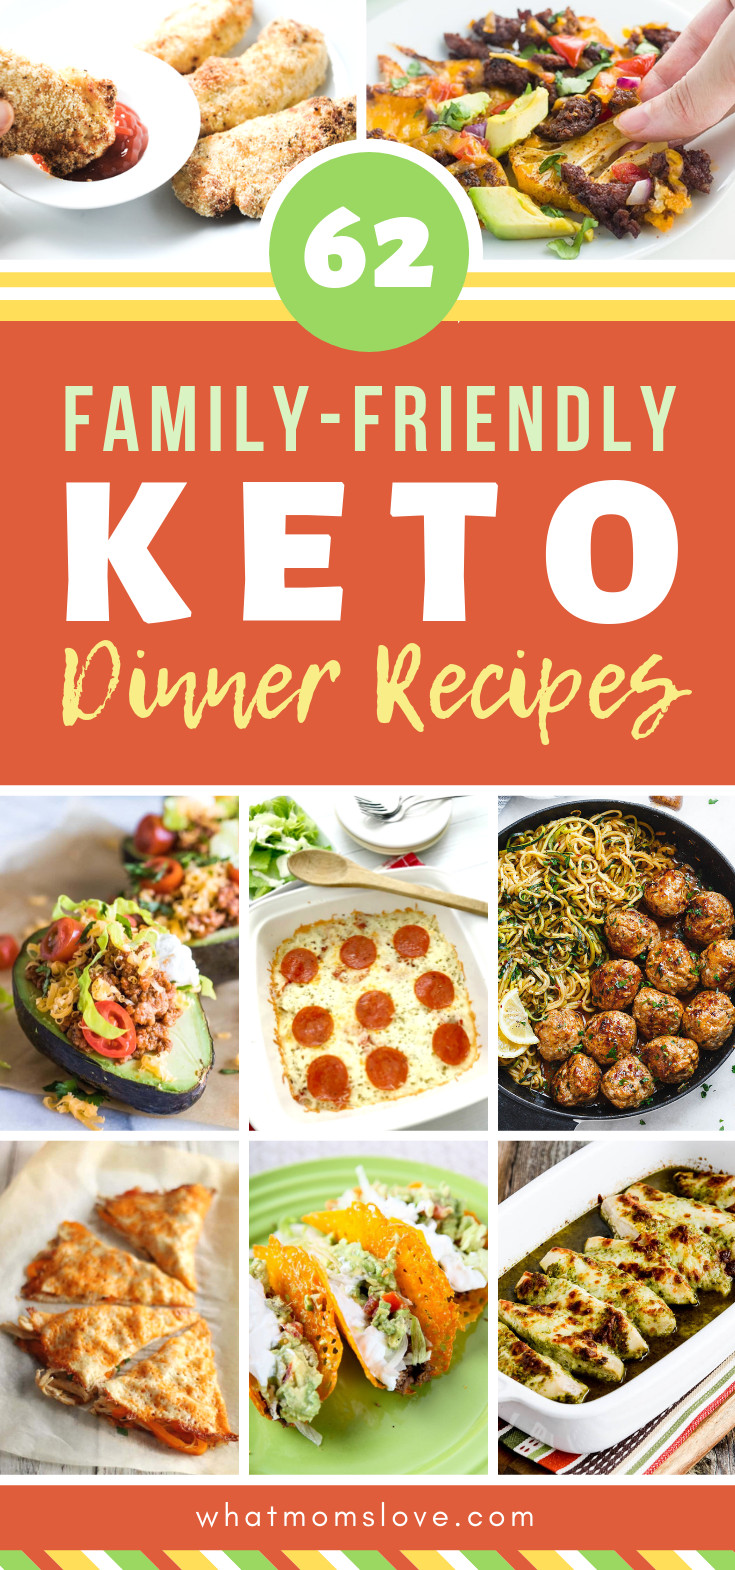 Family Friendly Keto Dinners
 60 Kid Friendly Keto Dinner Recipes Your Entire Family